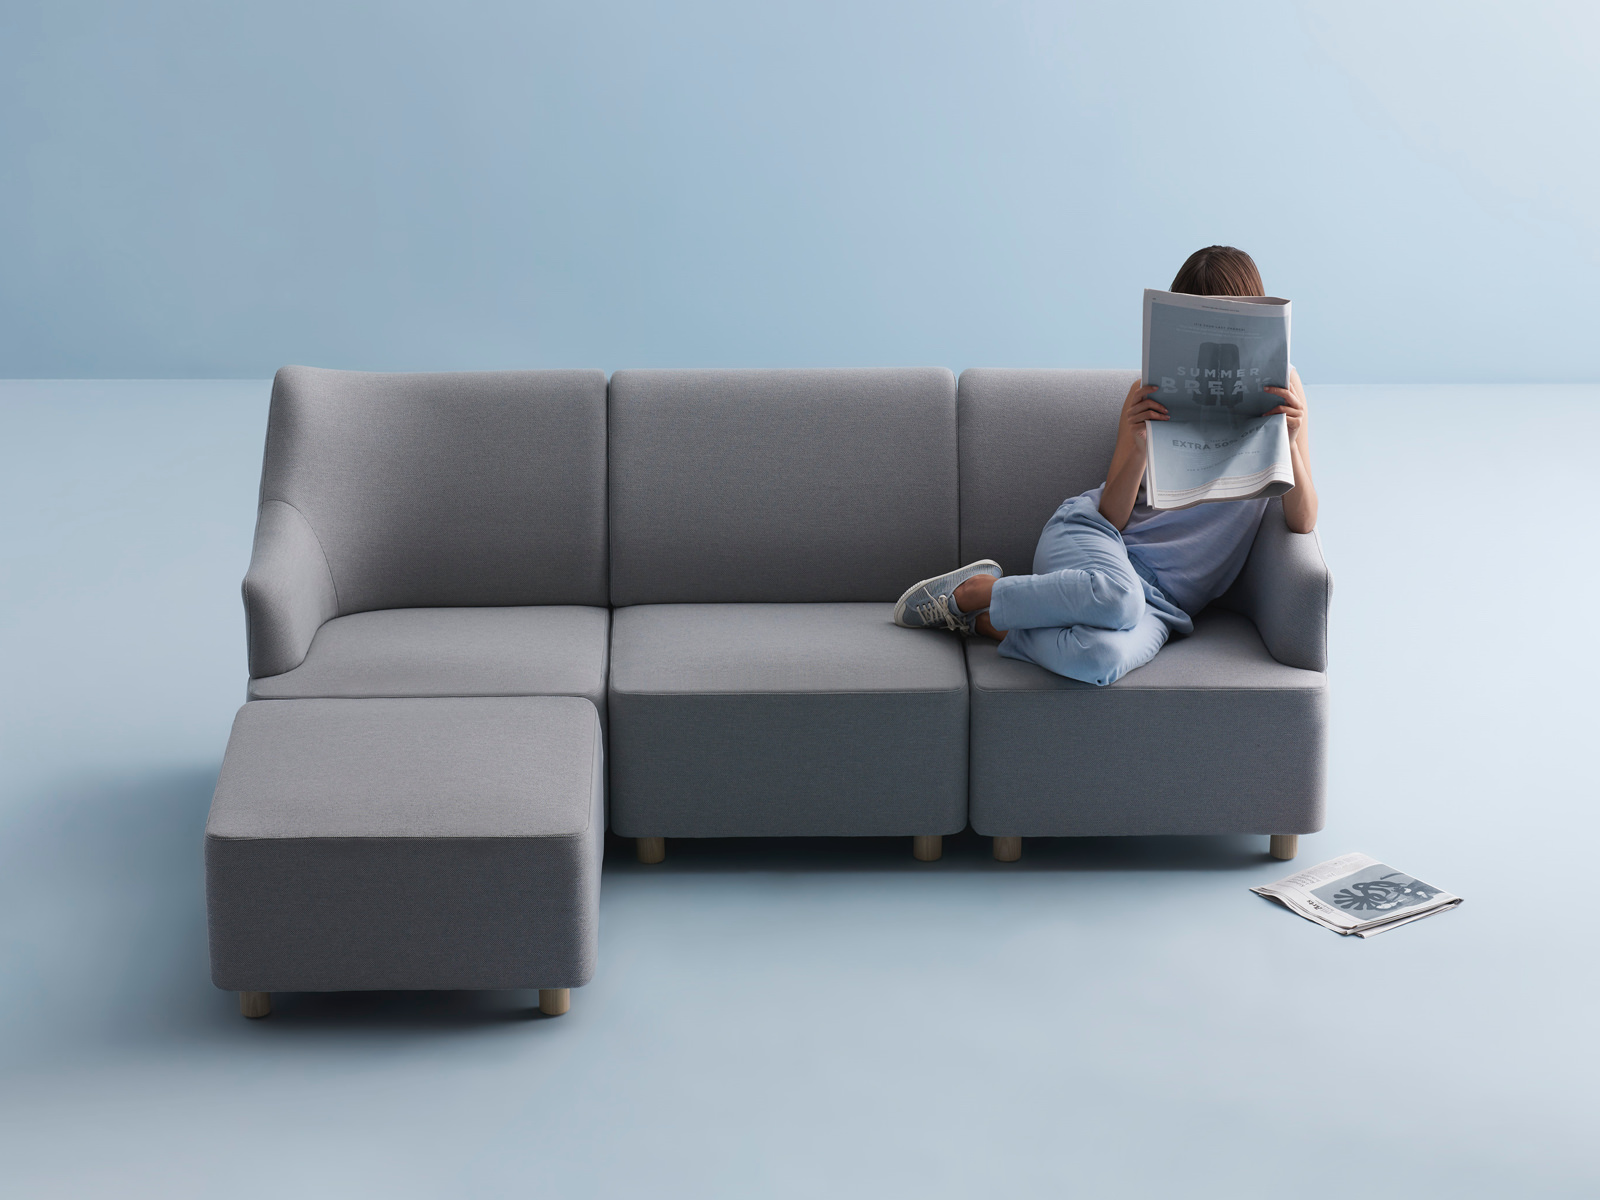 Woman reading a newspaper on gray, modular Plex Lounge Furniture.